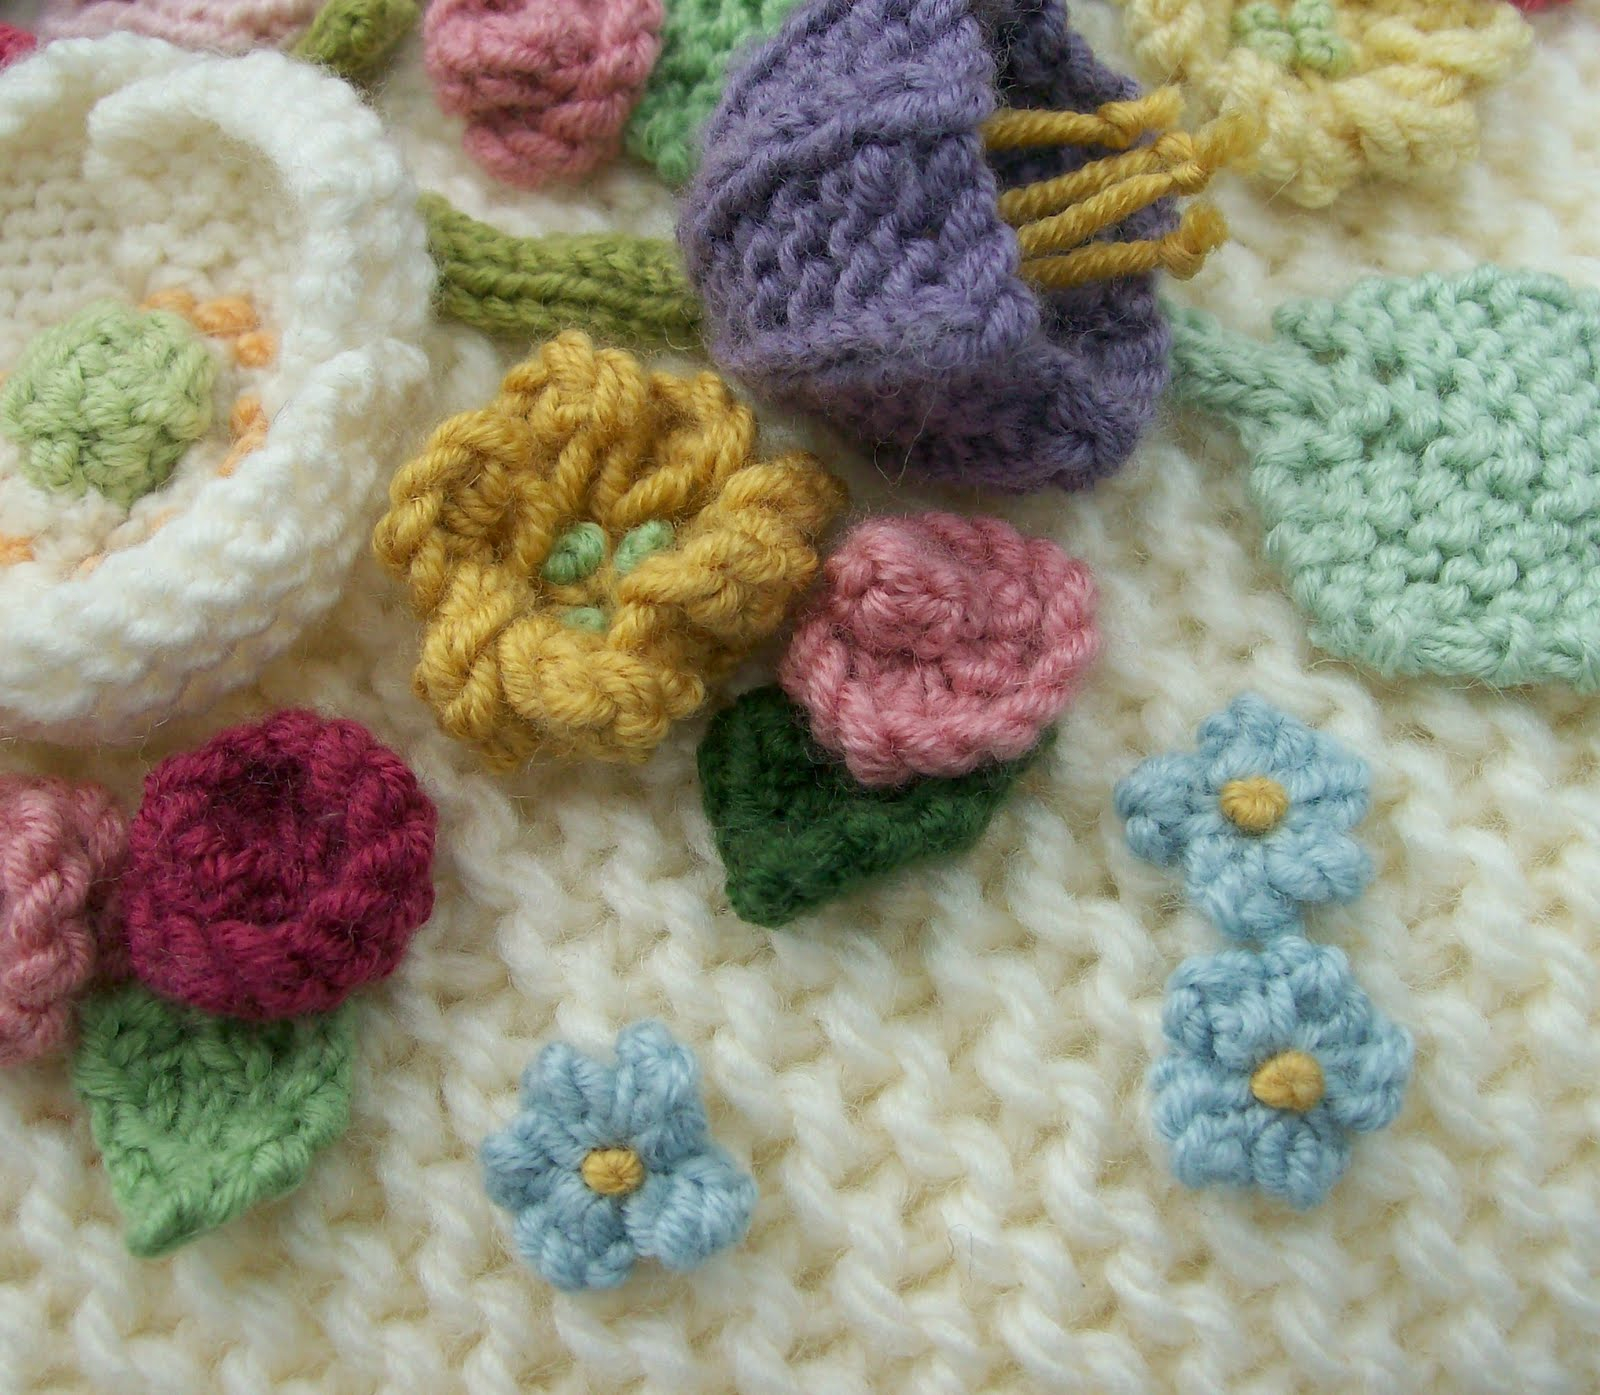 Knitted Flower Patterns Free Teddybearscottage Free Patterns